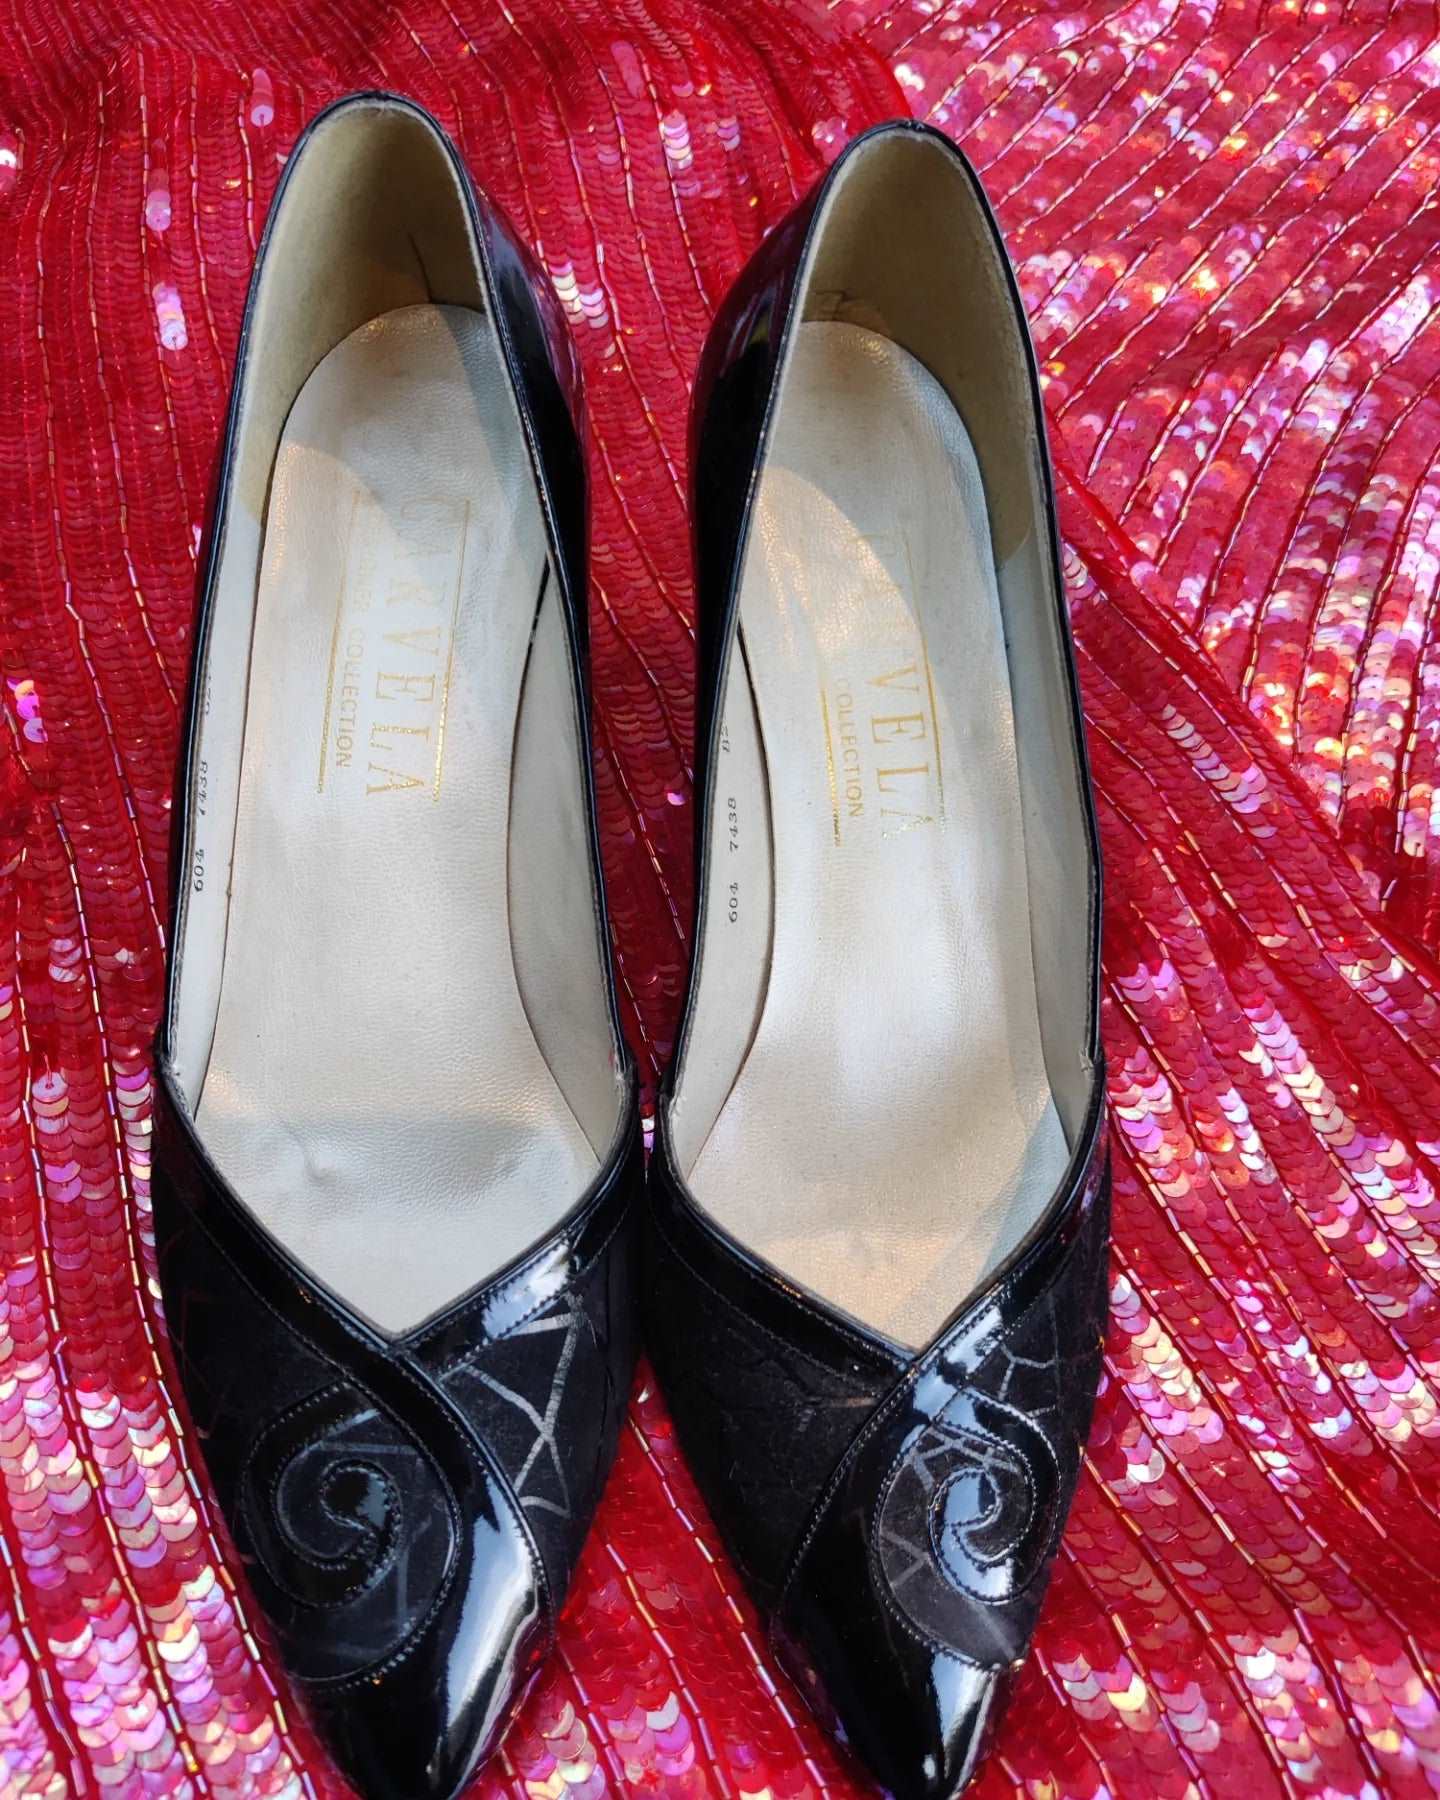 1980s black patent carvela heeled shoes. Size 7.